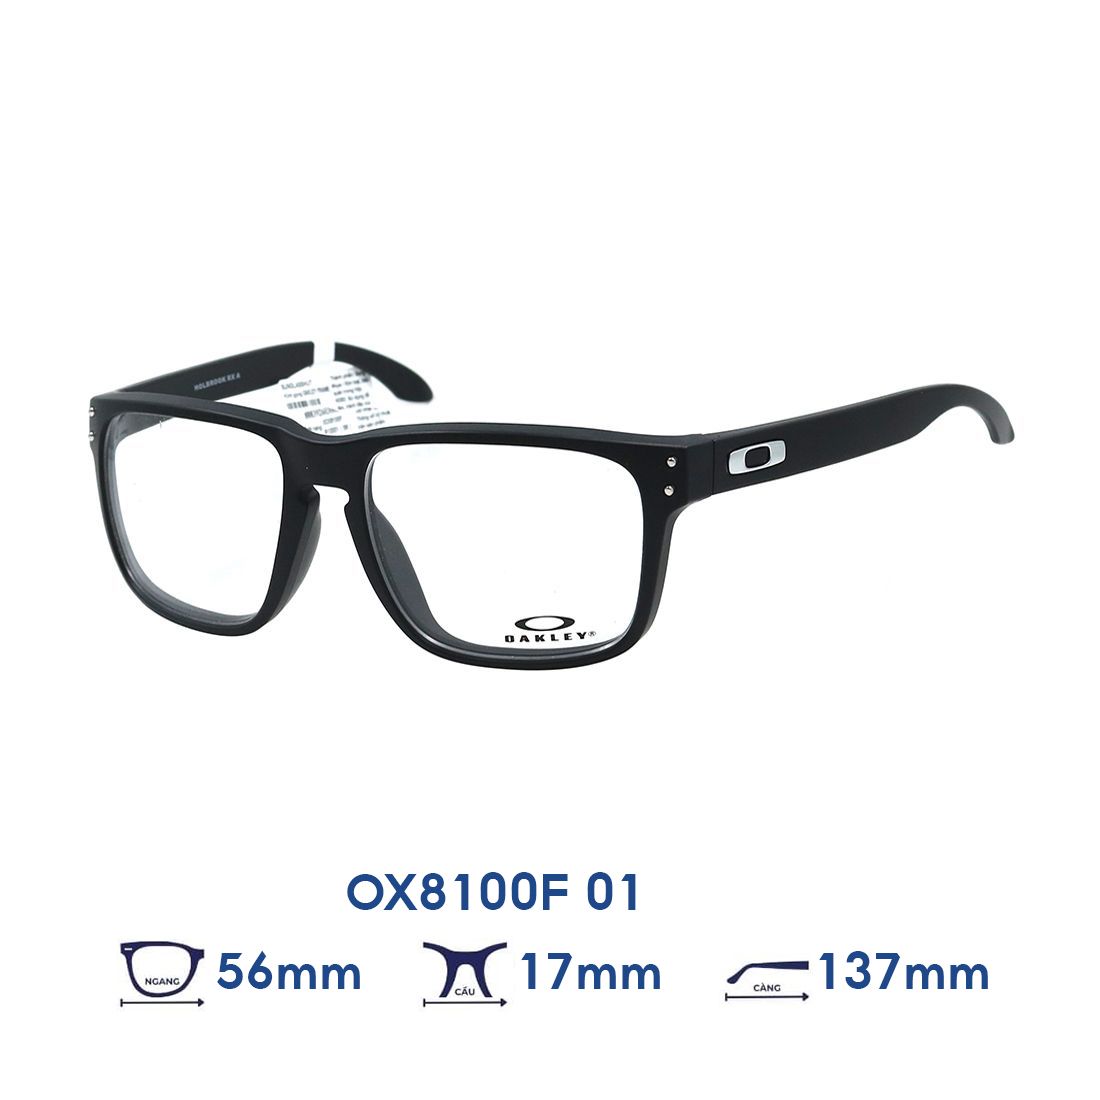  Gọng kính OAKLEY OX8100F 01 